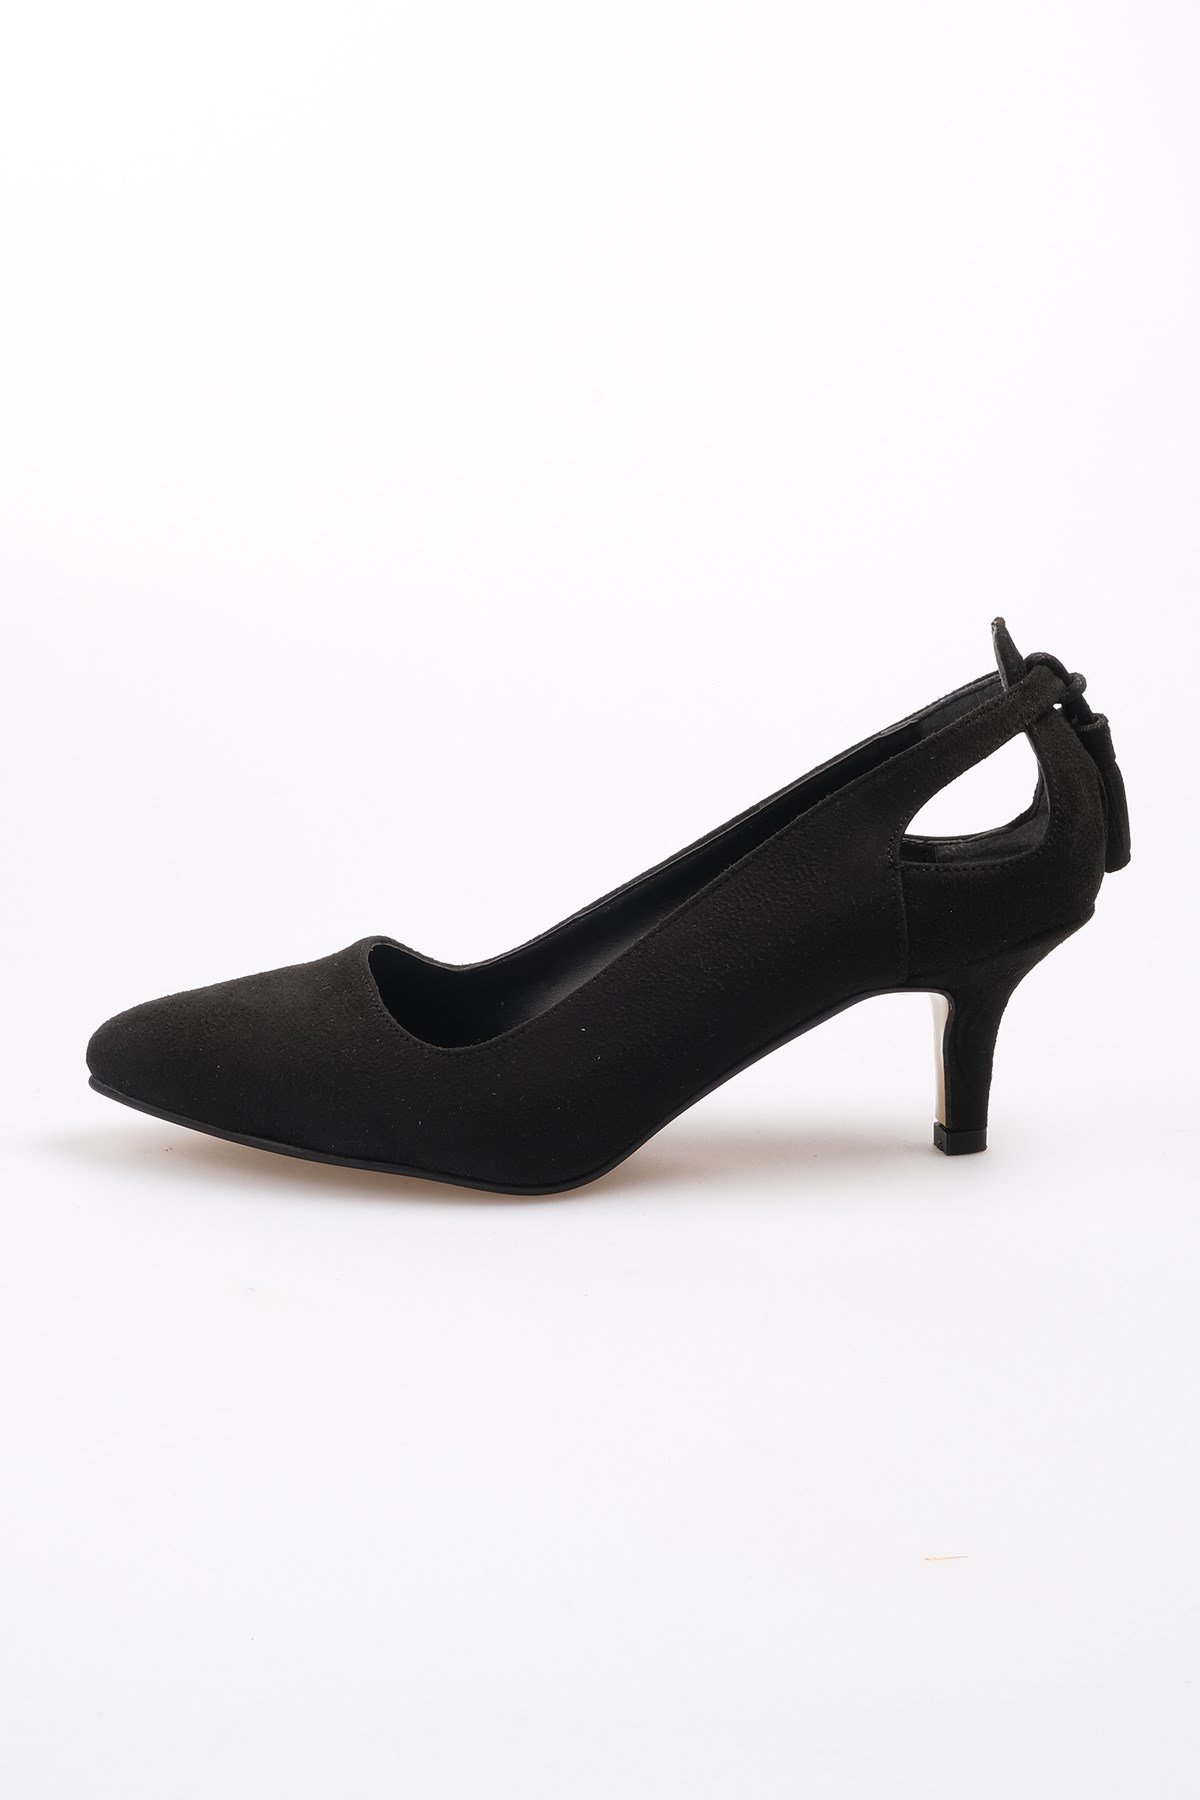 Mio Gusto Siyah Renk Süet Topuklu Ayakkabı